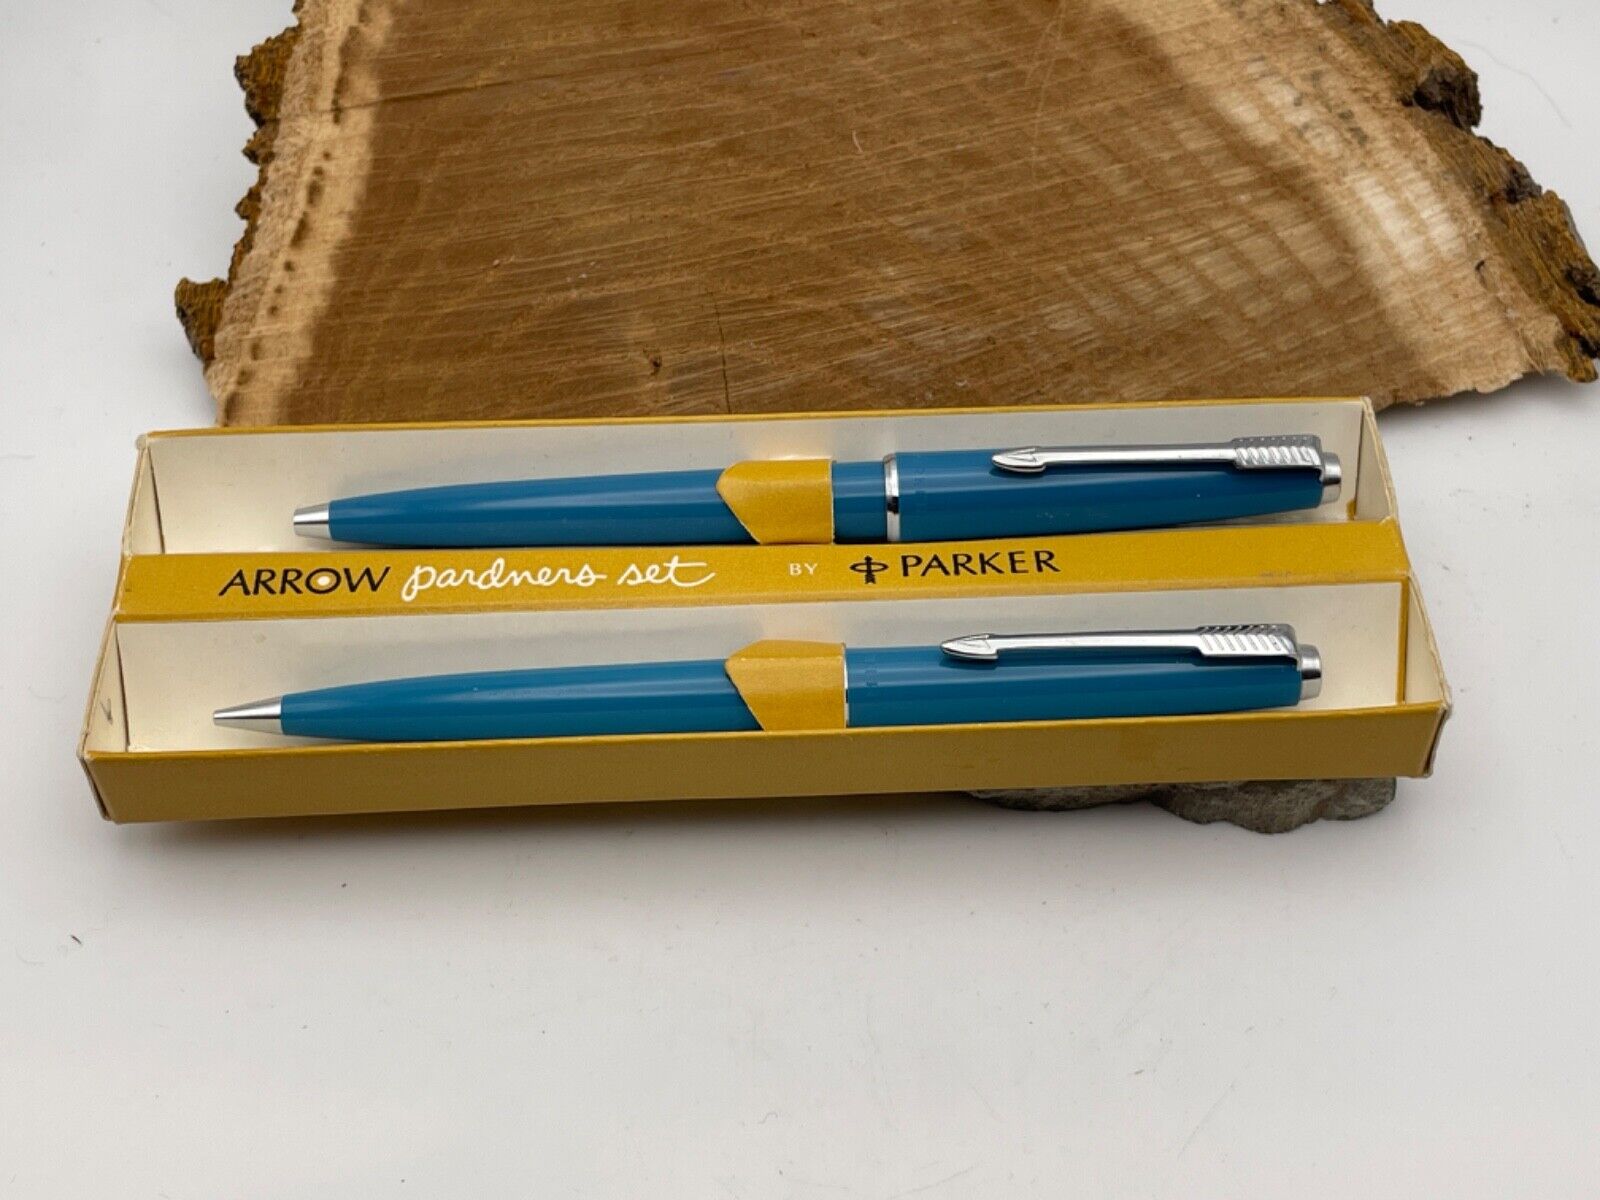 Vintage (early 1960s) Parker Arrow Pardner Pen and Pencil Set orig. box--1255.24